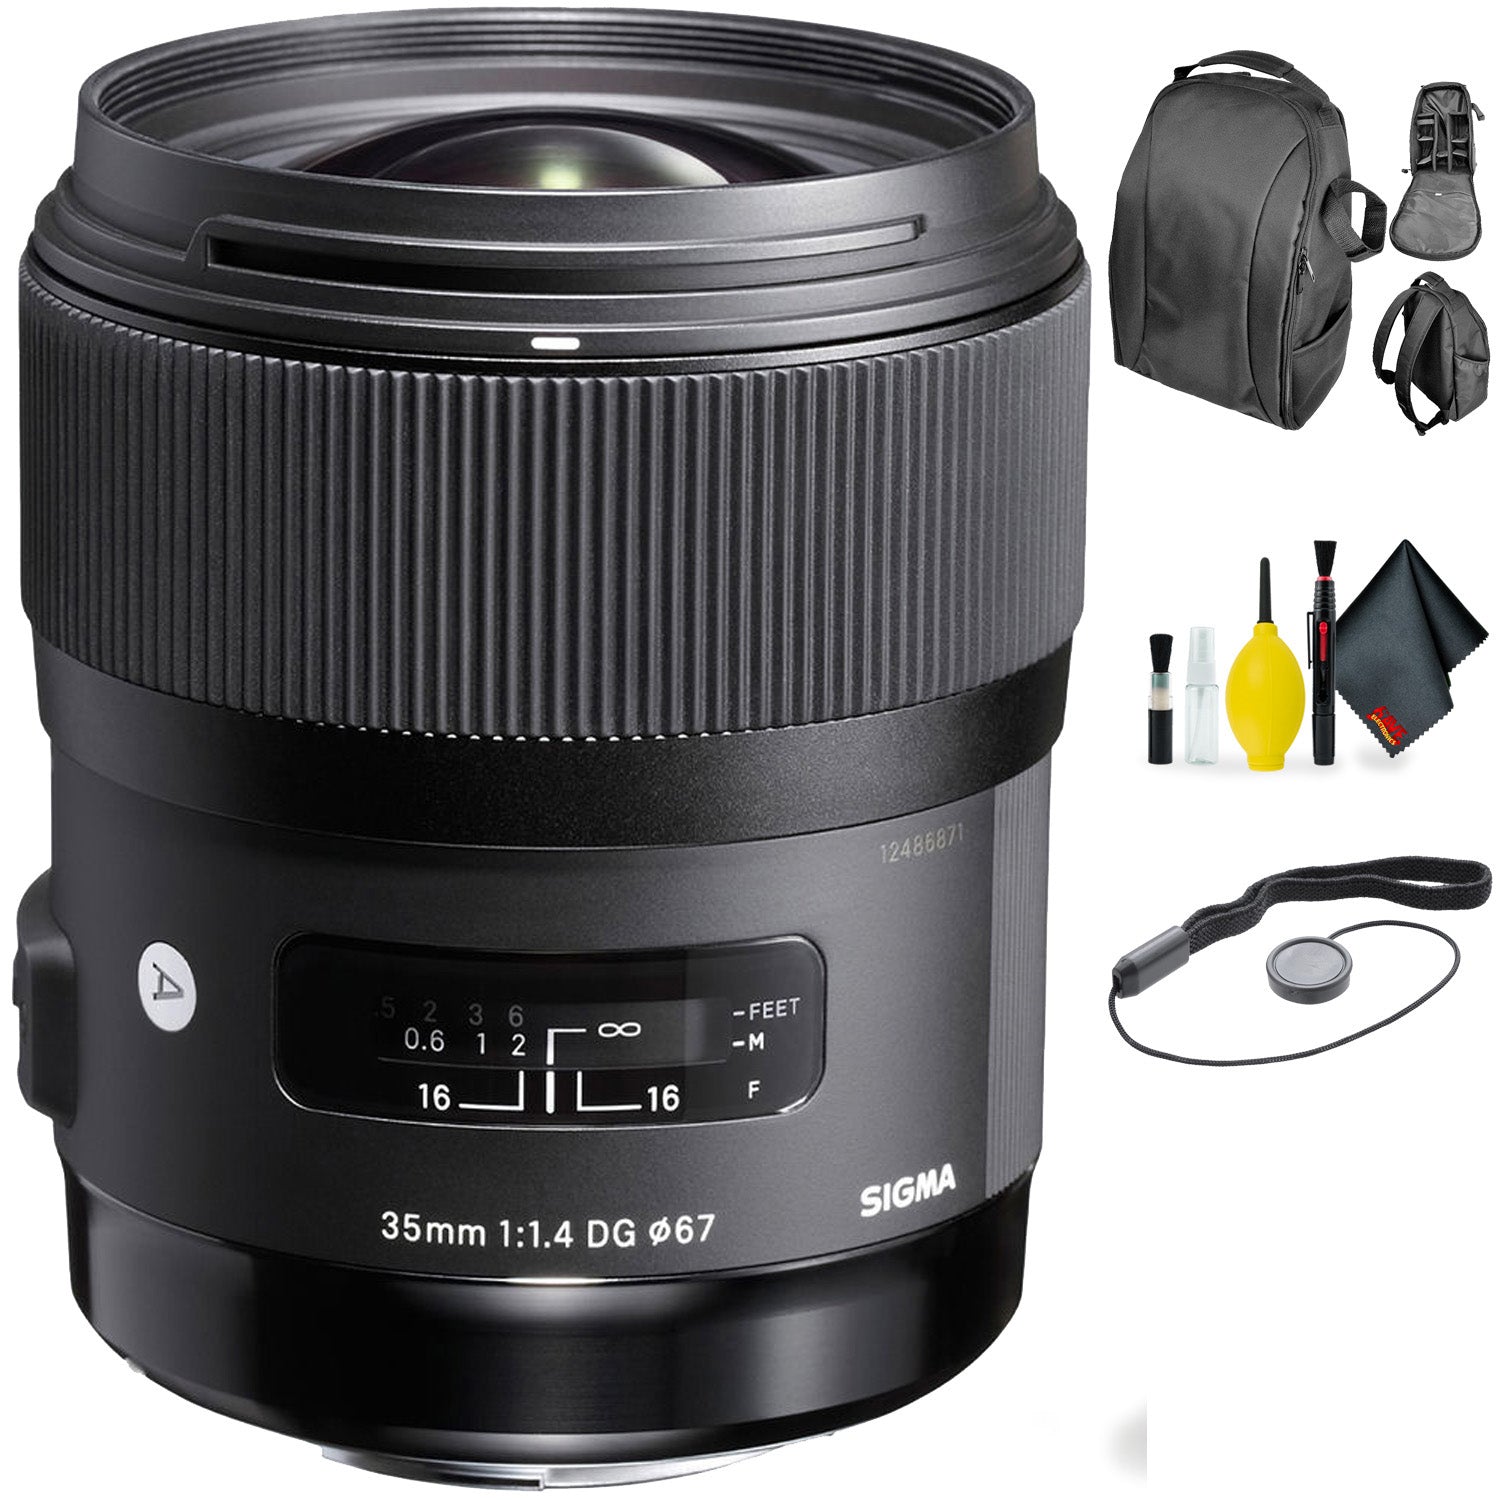 Sigma 35mm f/1.4 DG HSM Art Lens for Canon + Deluxe Lens Cleaning Kit Bundle